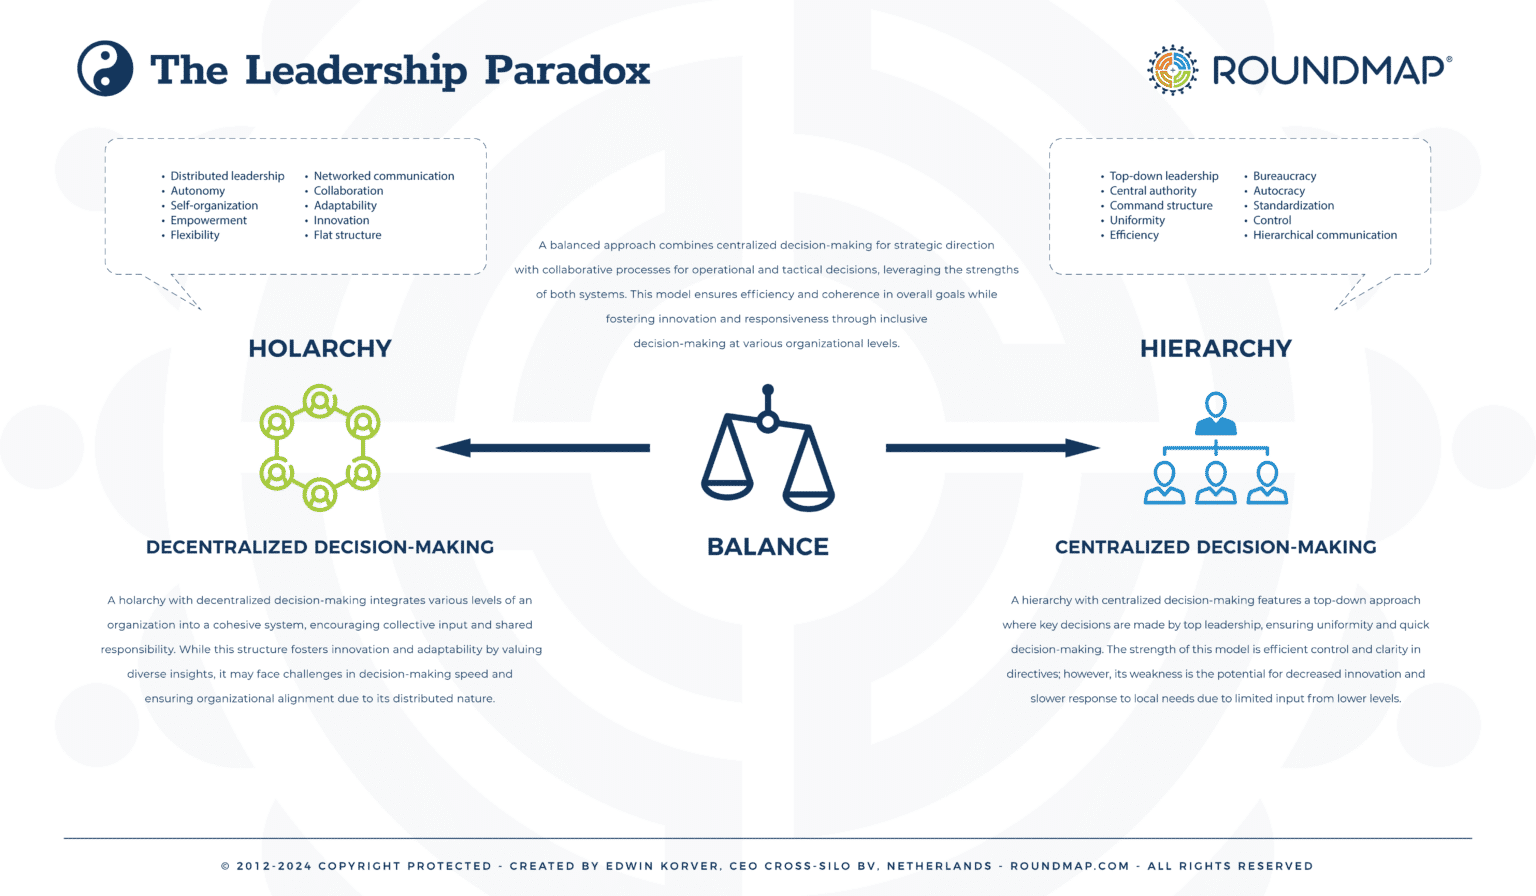 The Leadership Paradox